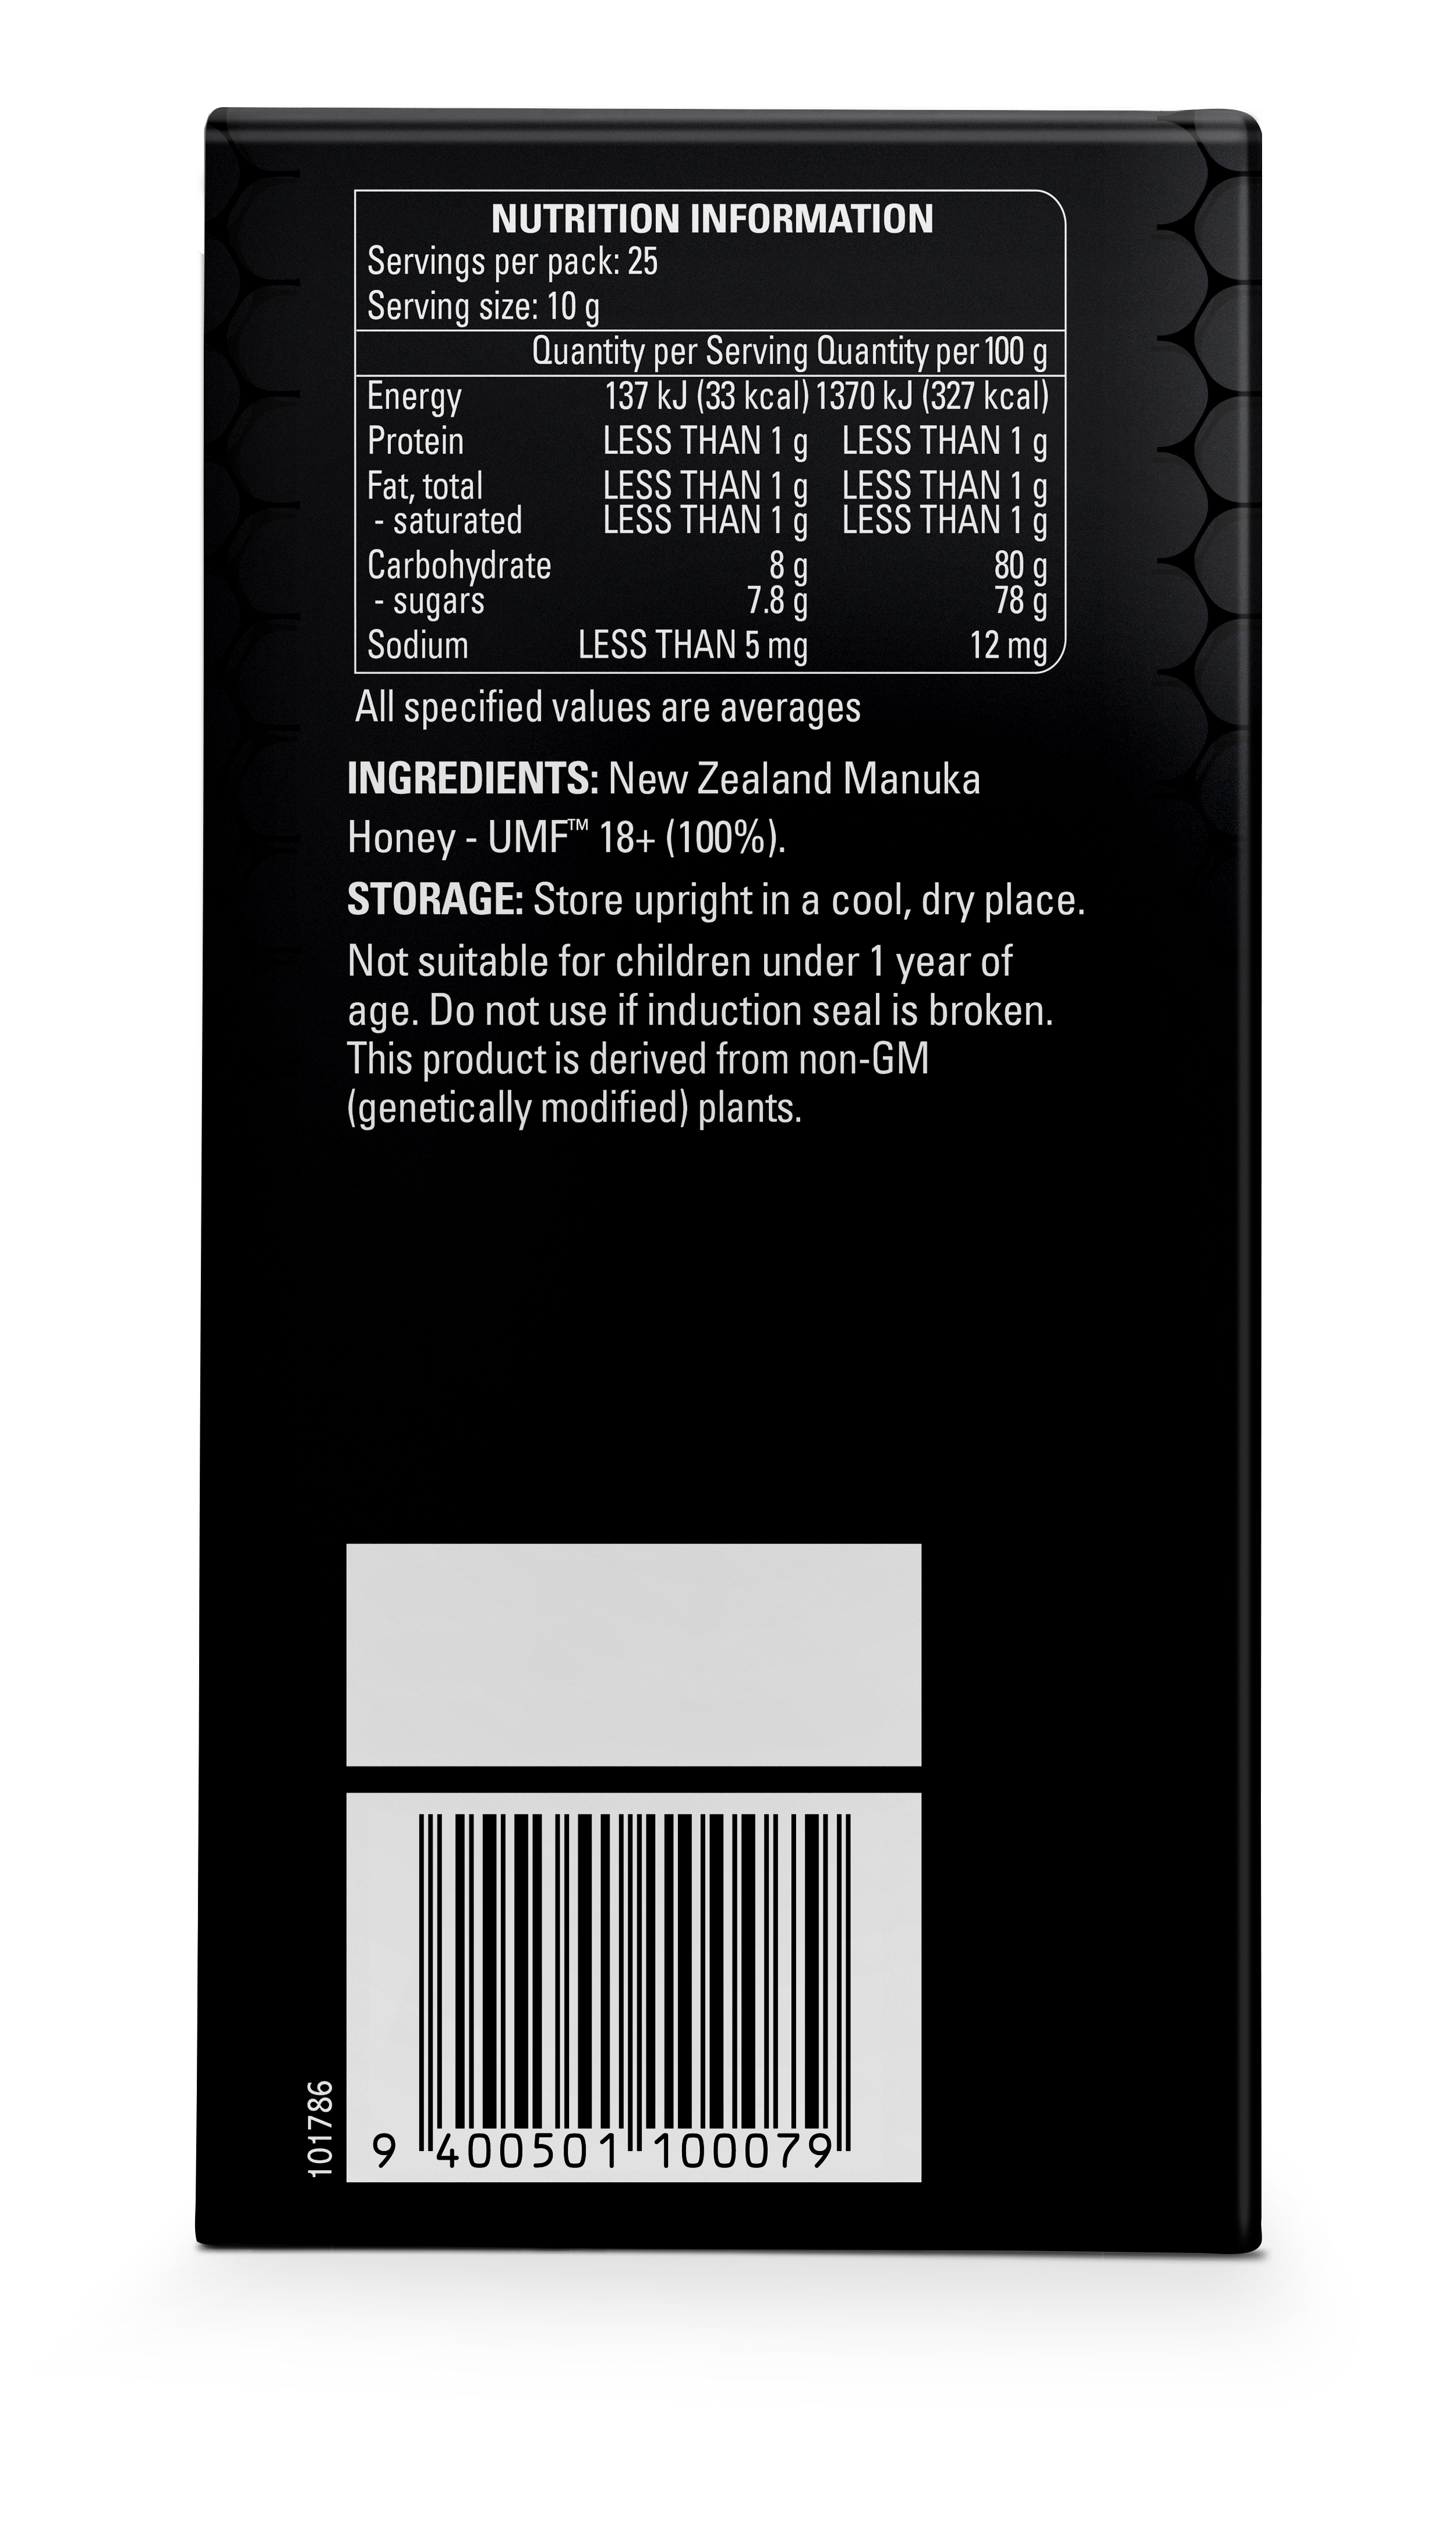 Comvita Manuka Honey UMF™ 18+, 250 g.